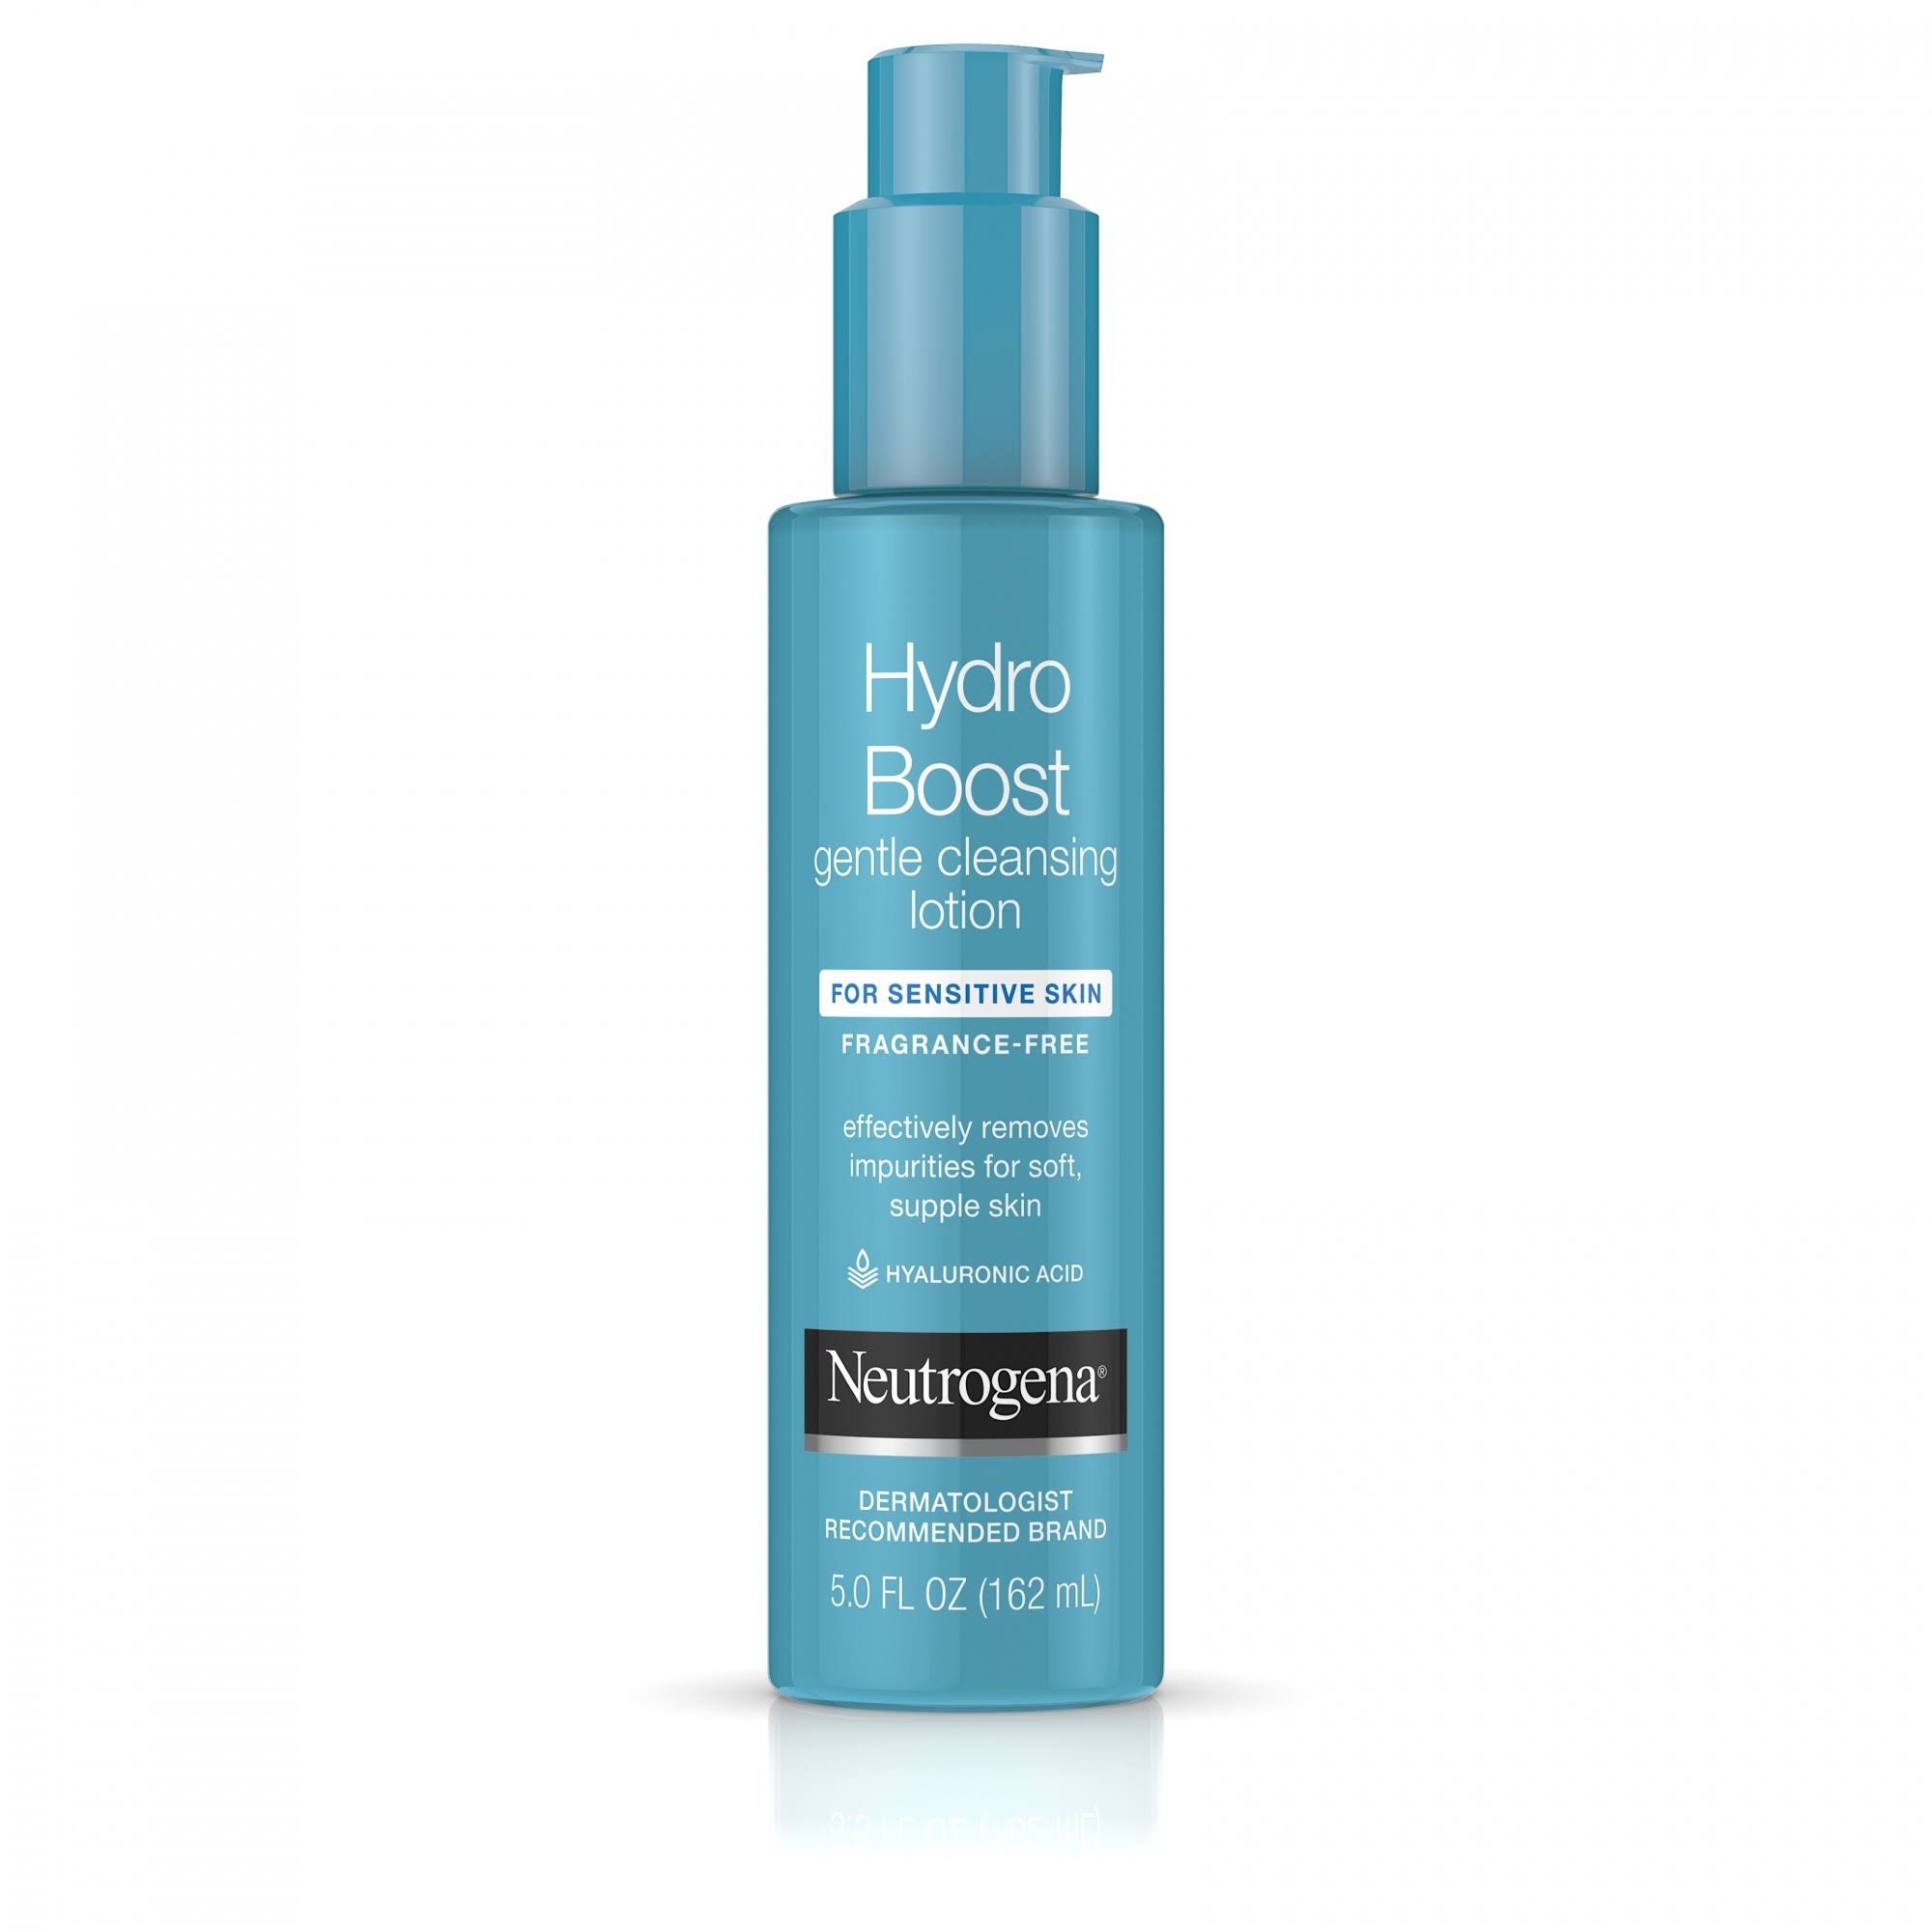 Neutrogena Hydro Boost Gentle Cleansing Lotion Fragrance Free 5 oz